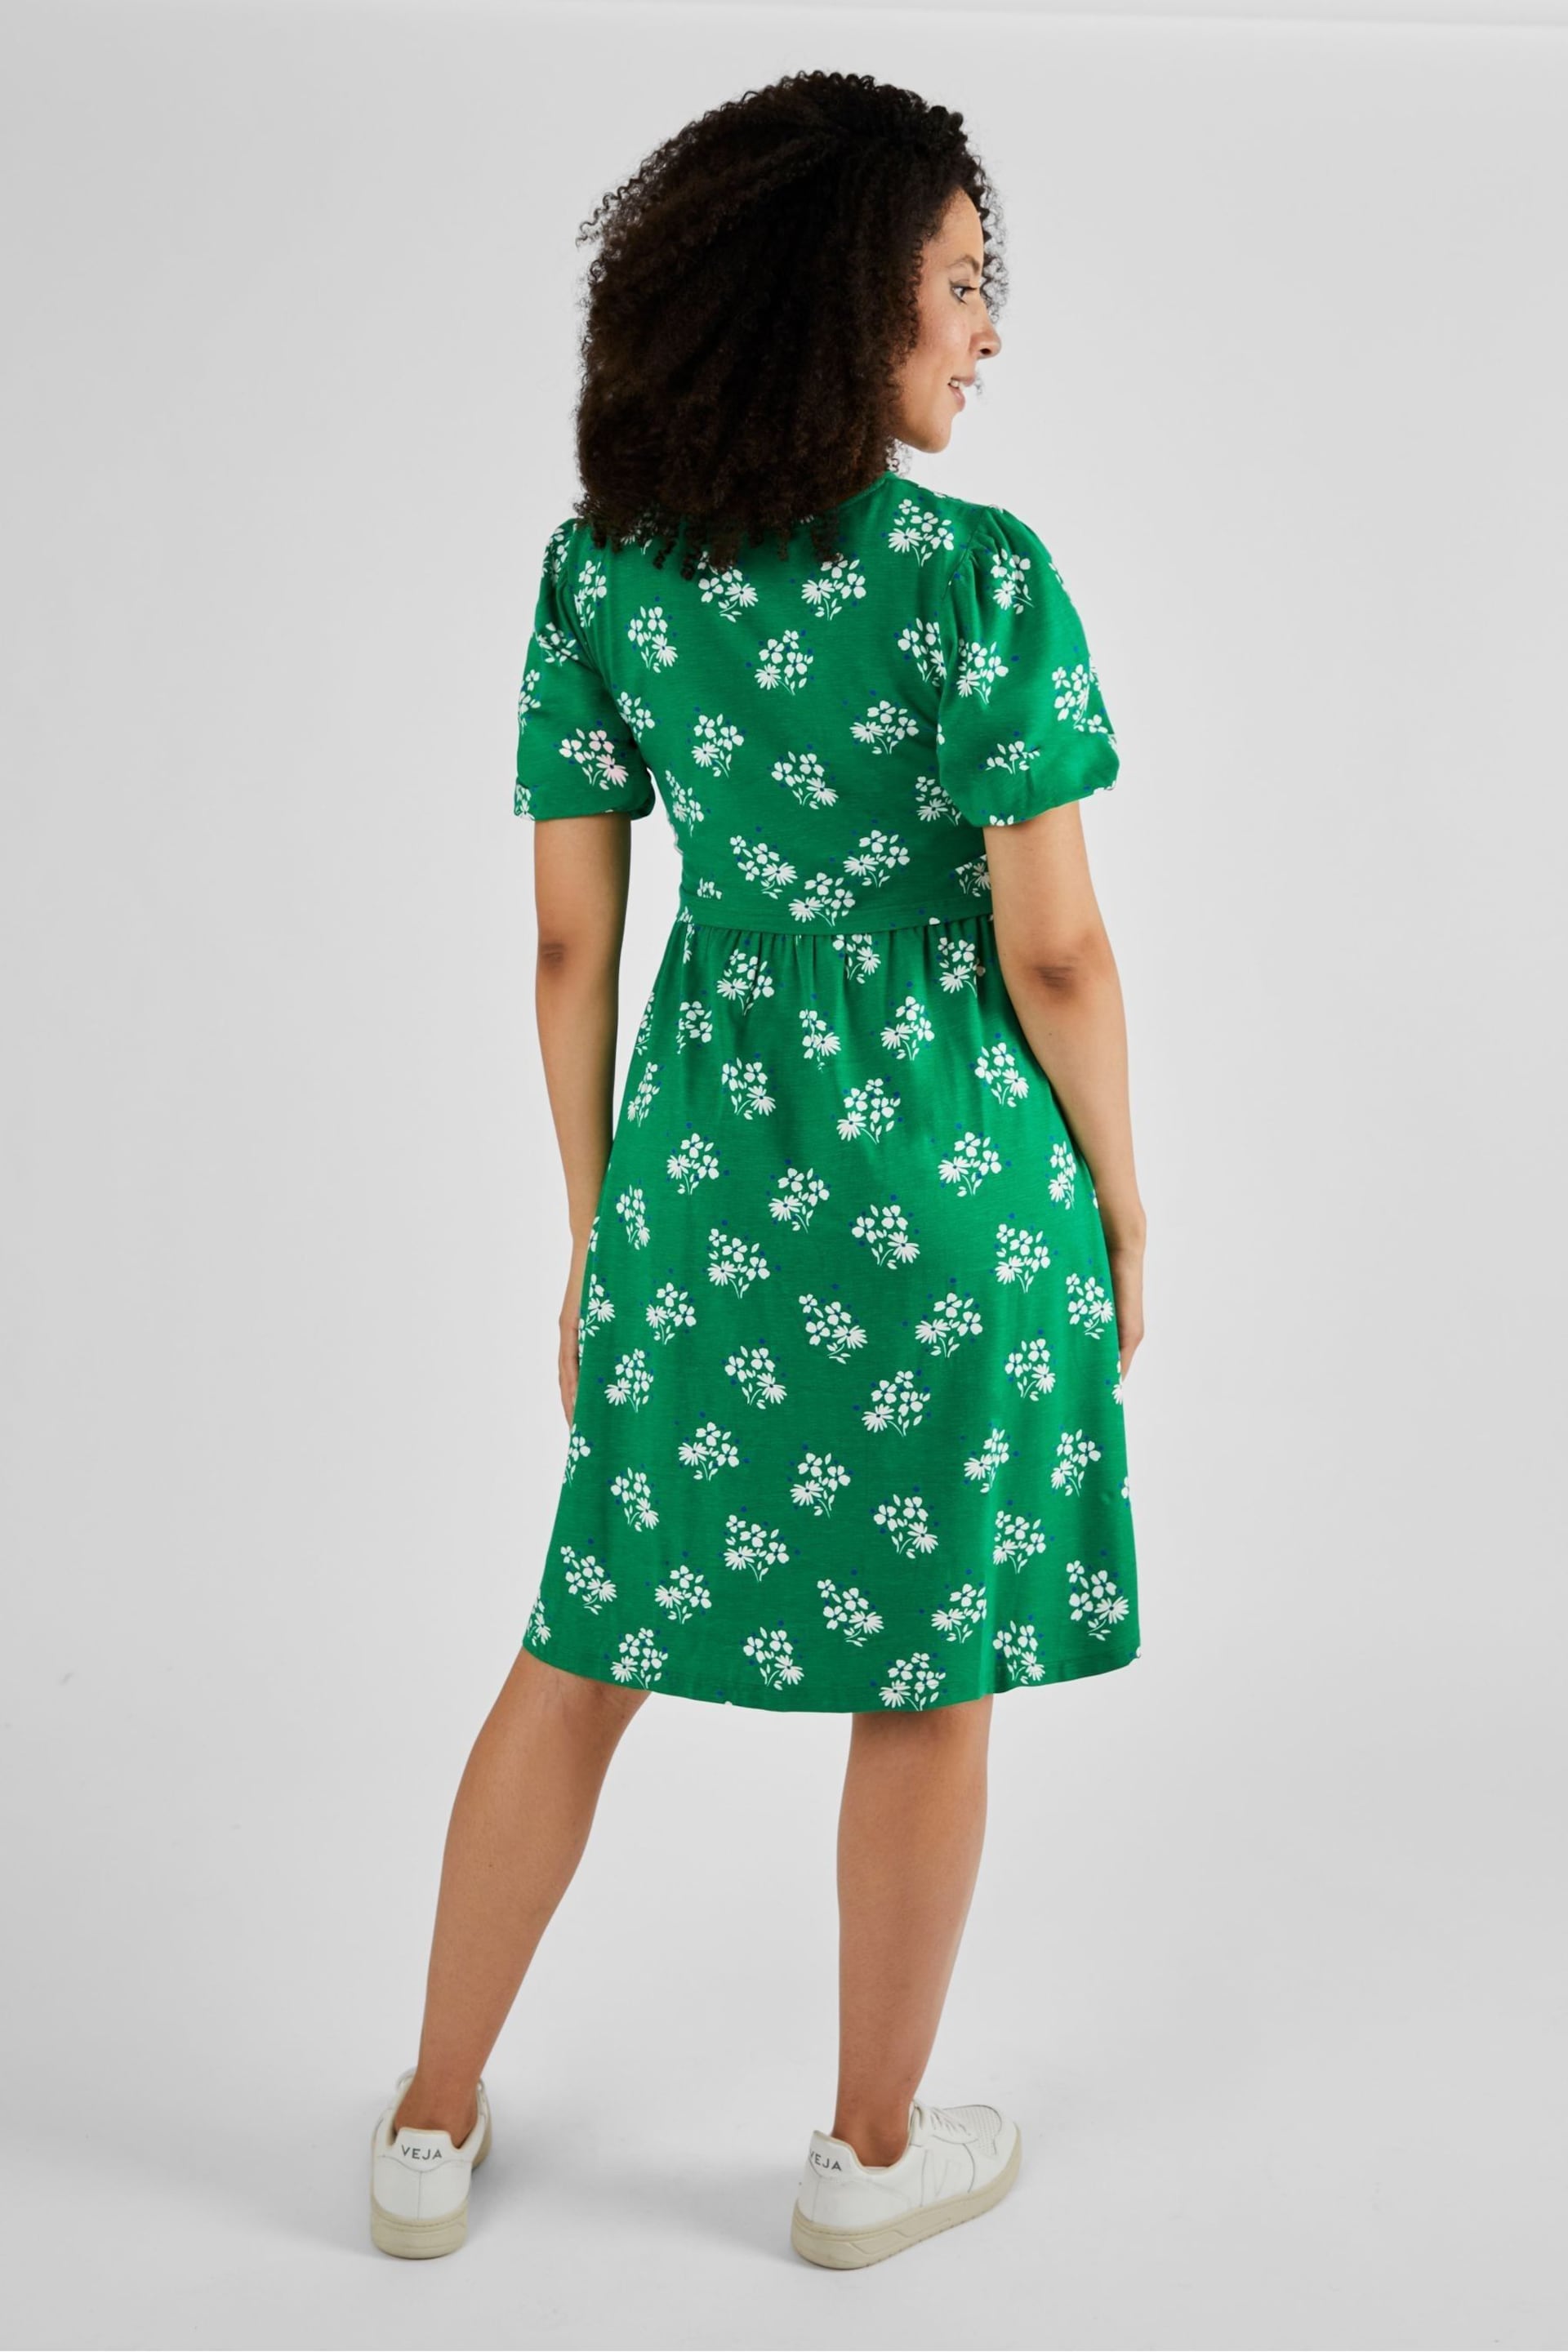 JoJo Maman Bébé Green Multi Print Maternity & Nursing Dress - Image 2 of 5